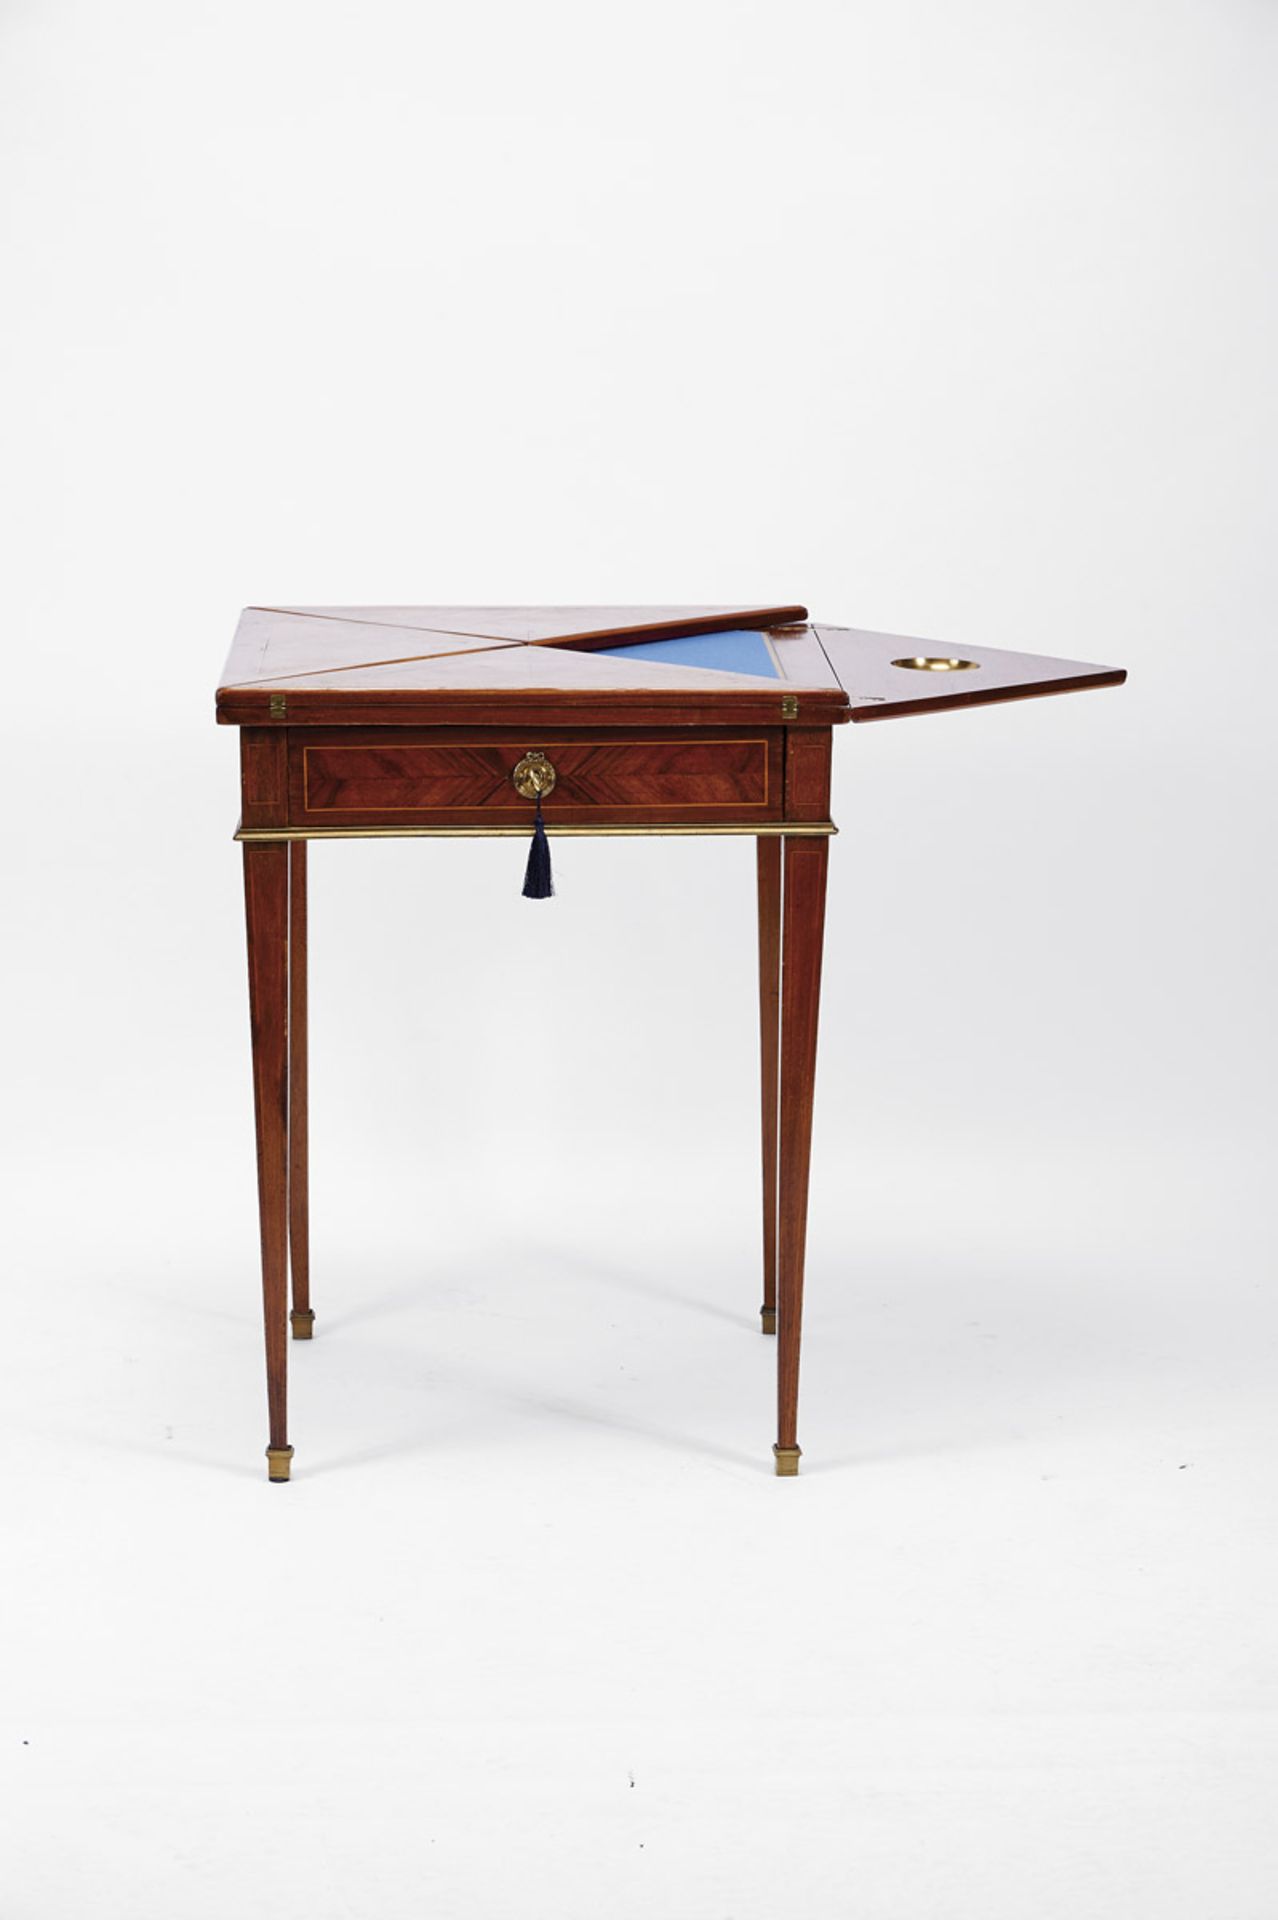 An Envelope Game Table, mahogany and mahogany veneer, satinwood fillets, metal applications, French,